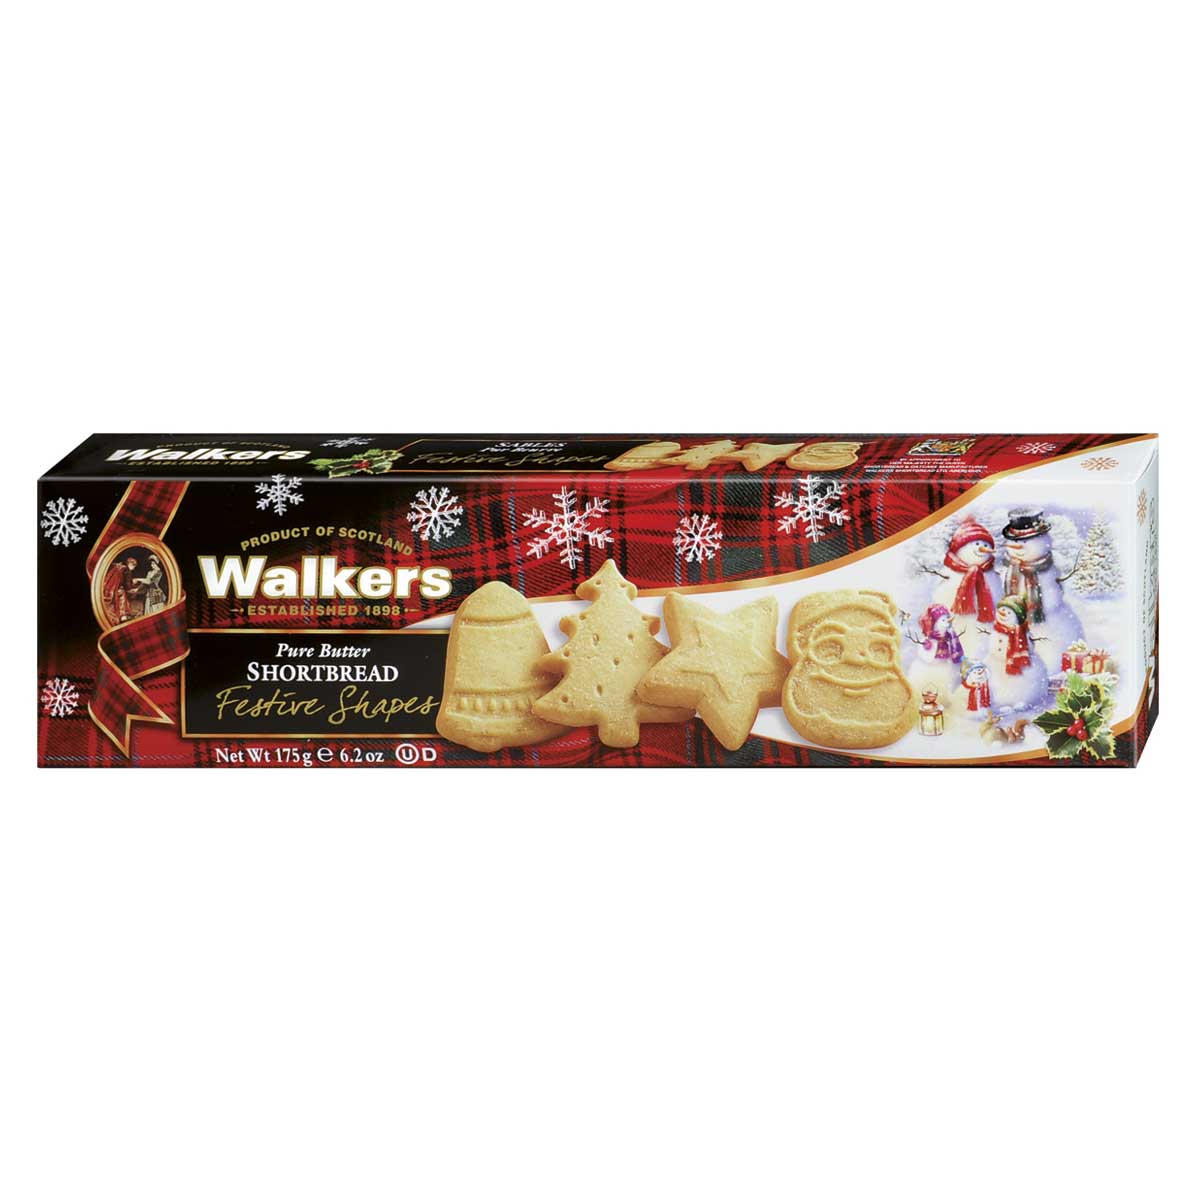 Walkers Shortbread – Festive Shapes Shortbread 175g.